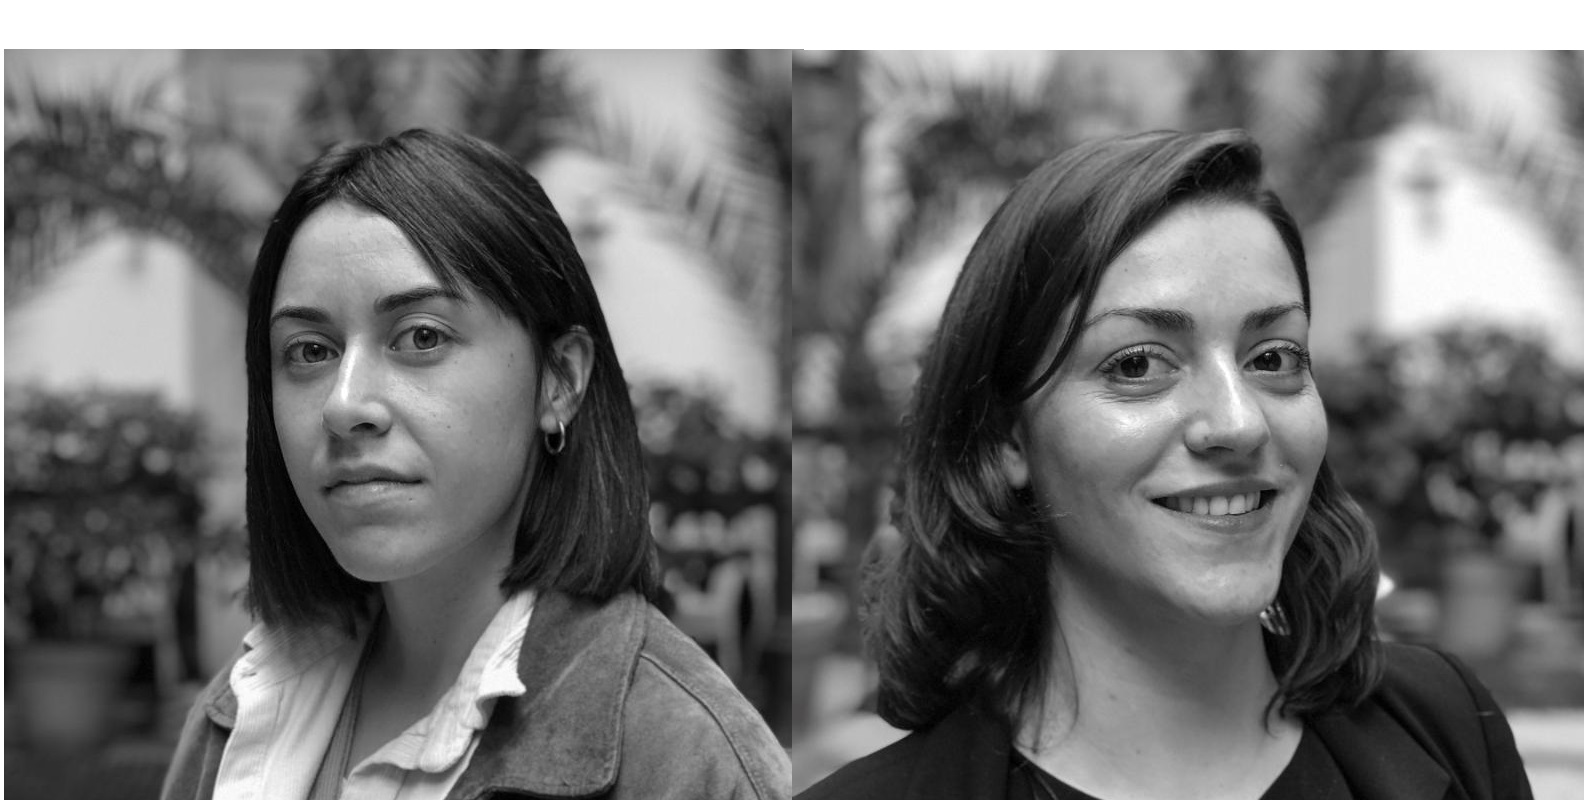 Darwin Social Noise, Lara Velázquez, Iria Darriba, programapublicidad